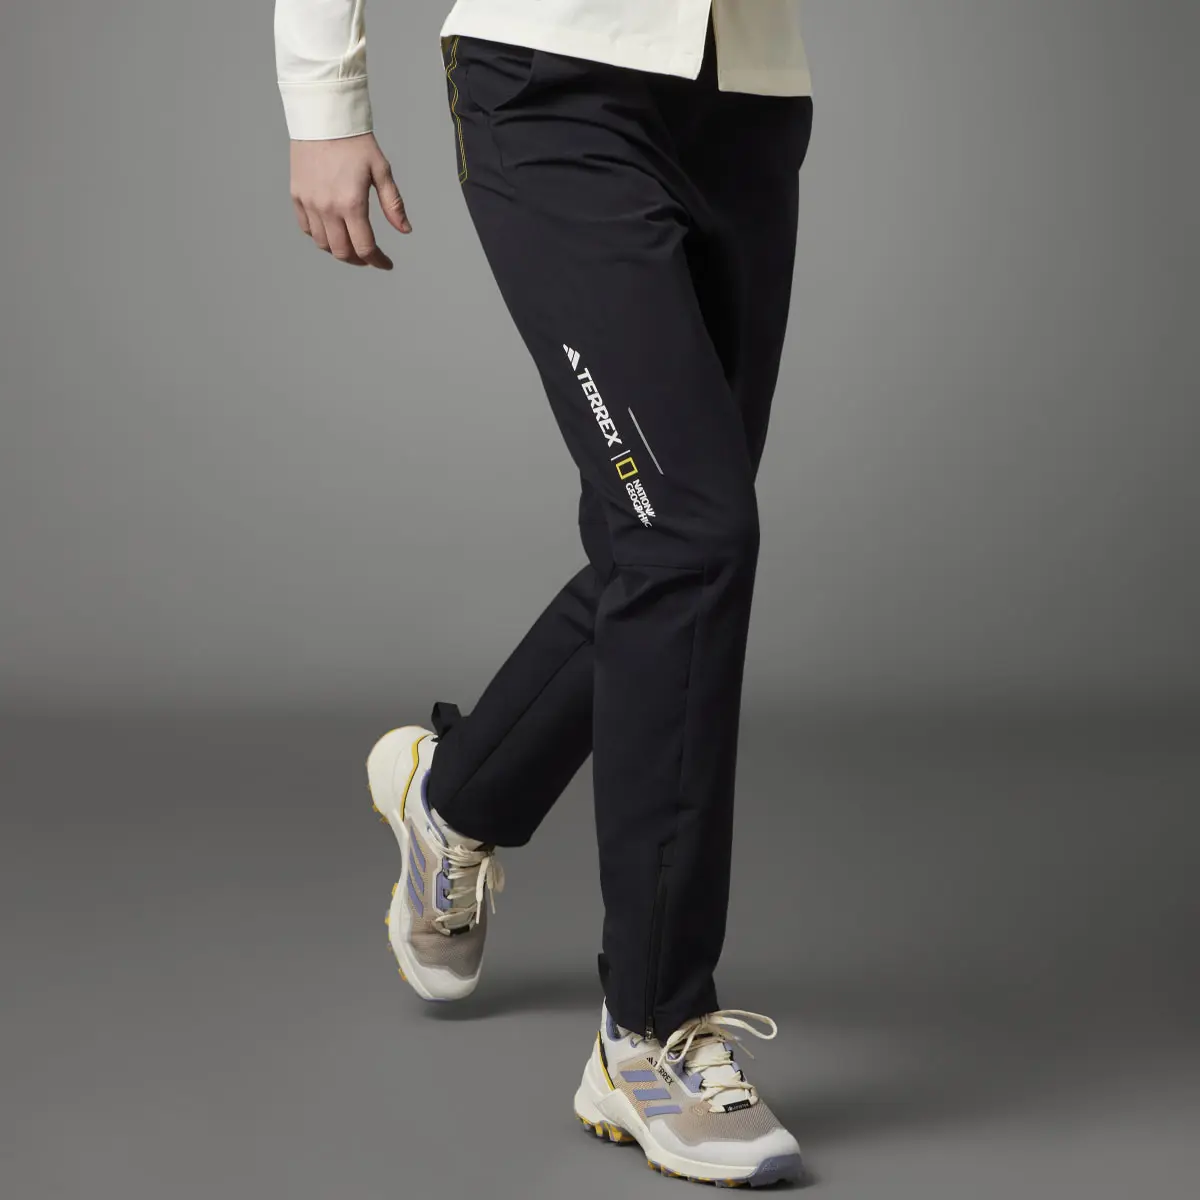 Adidas Pantalon National Geographic. 1